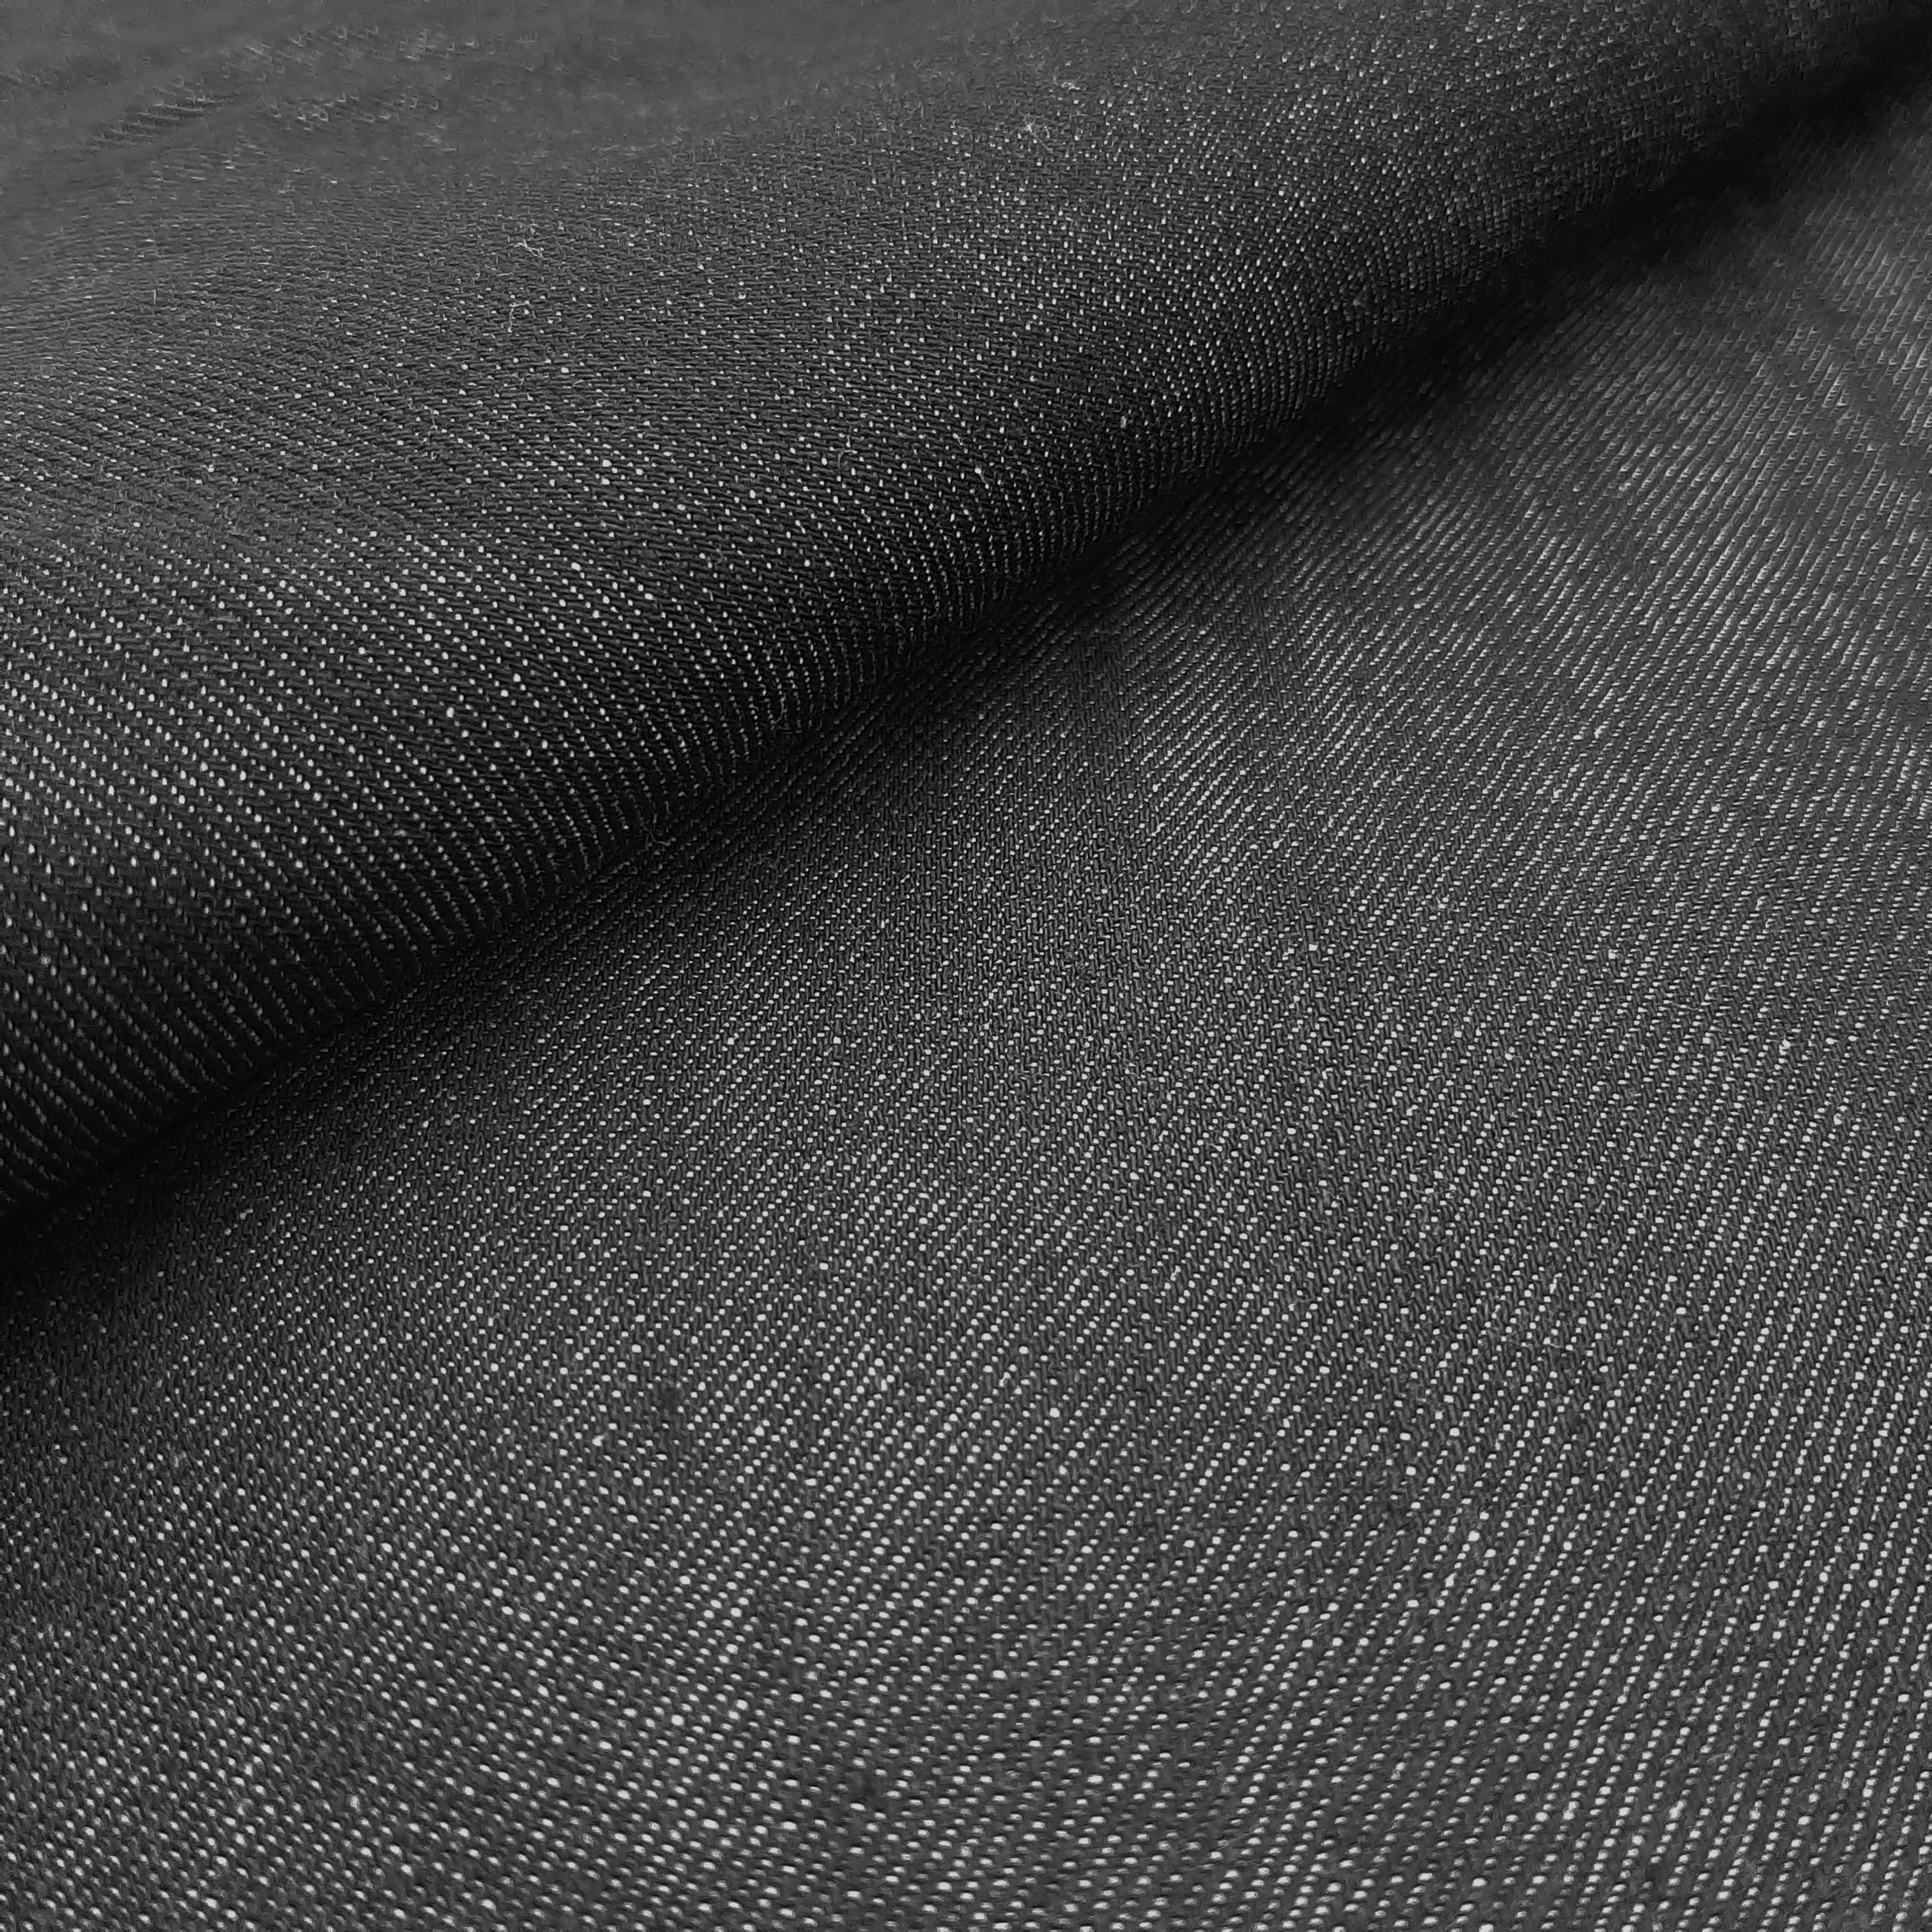 DENIM - jeans fabric - grey